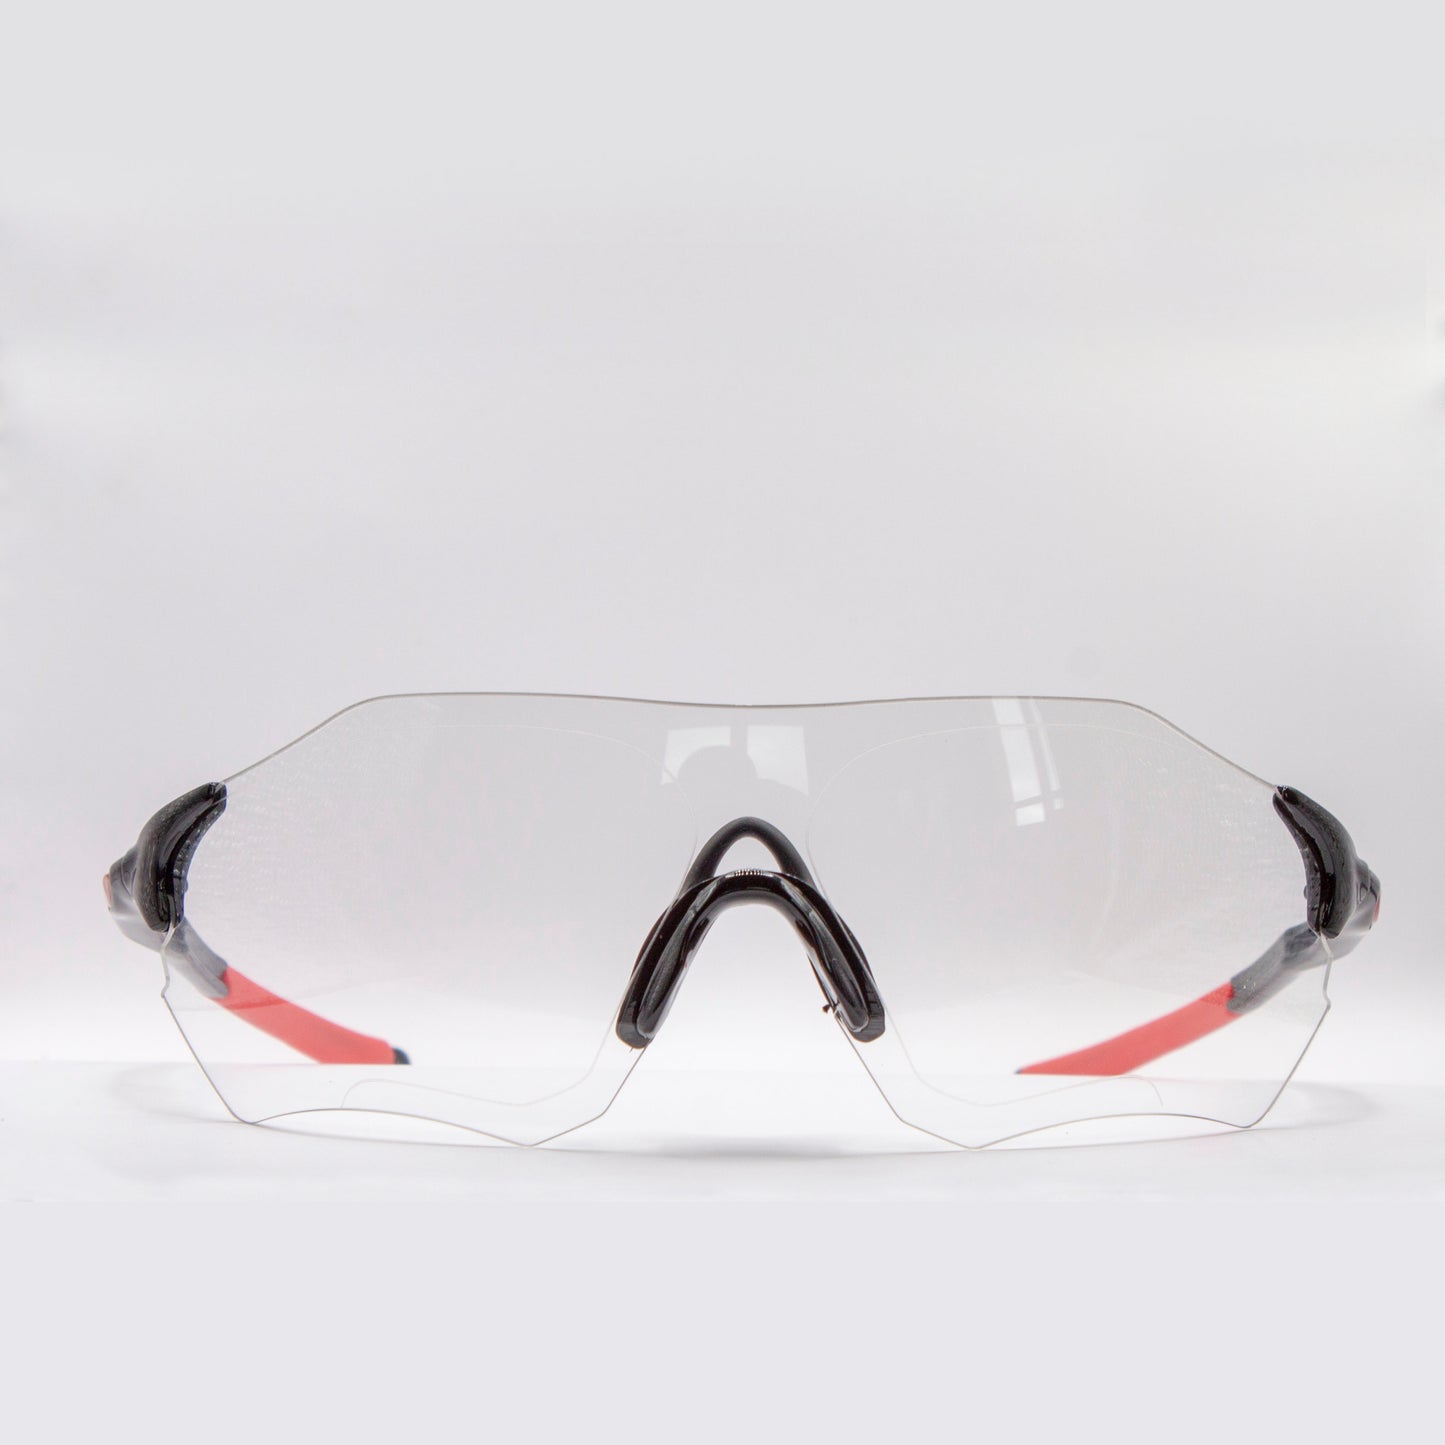 Radikle mountain bike sunglasses - front view